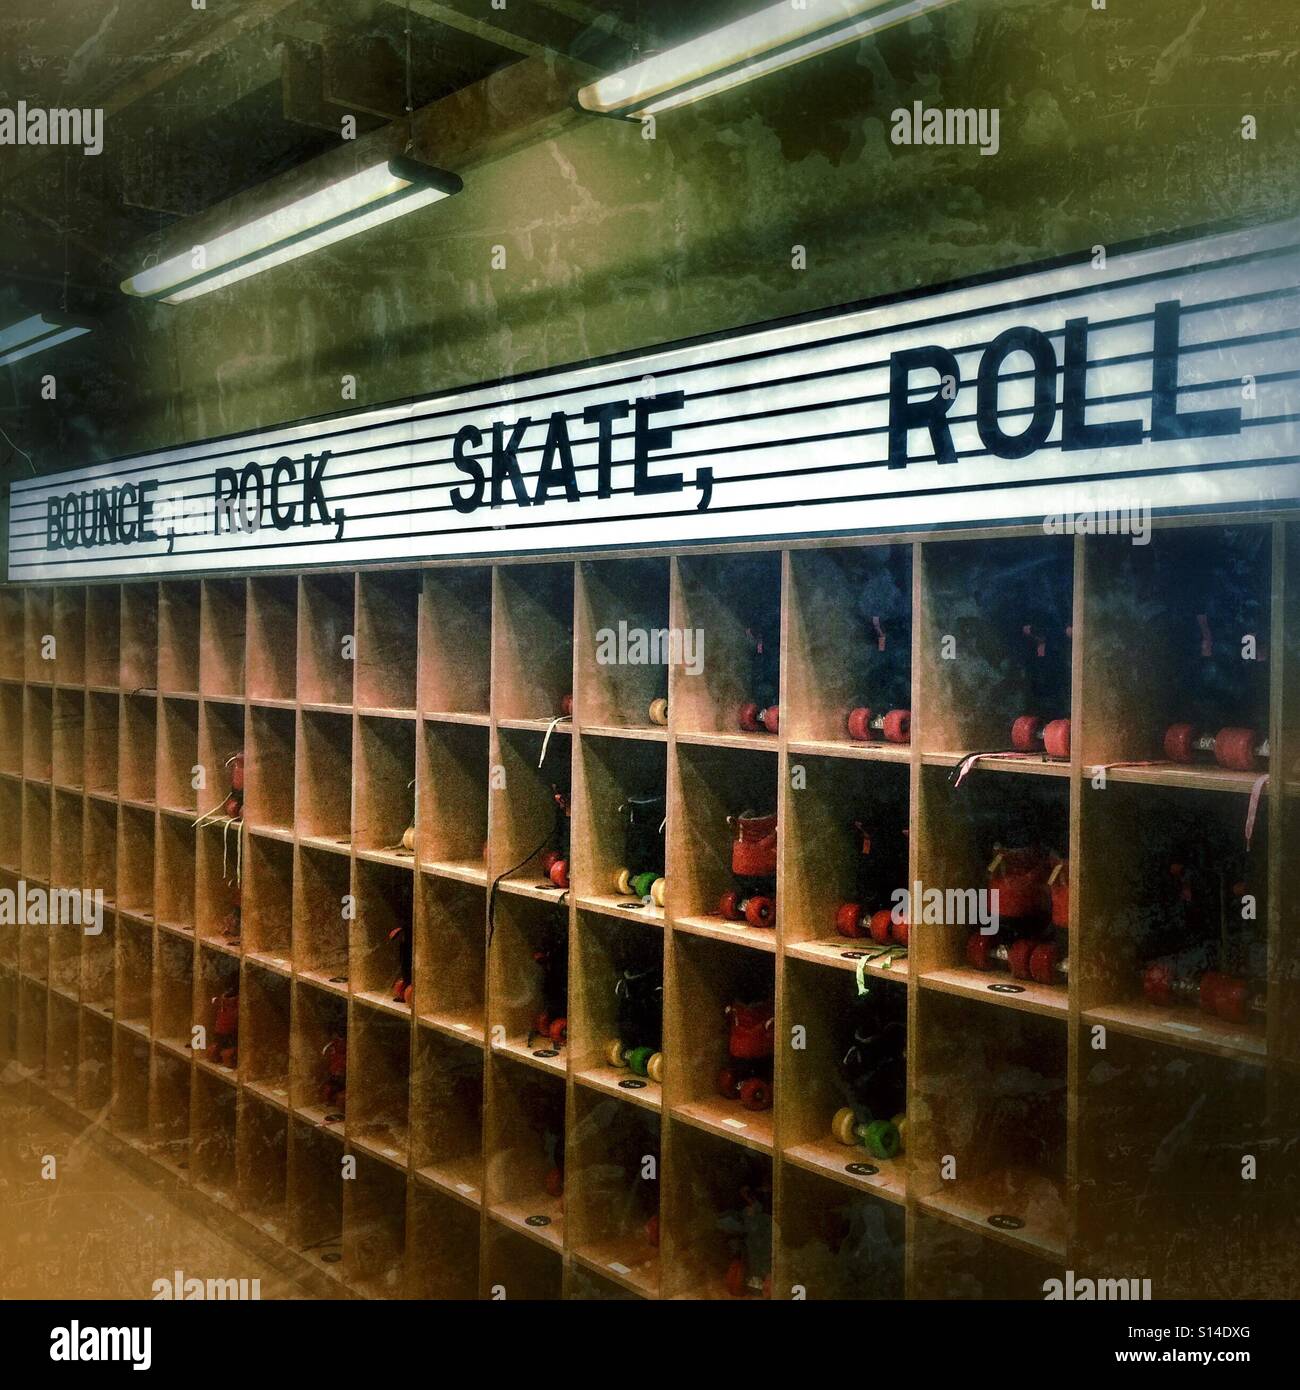 Bounce Rock Skate Roll - Dreamland Margate roller disco interior Stock Photo